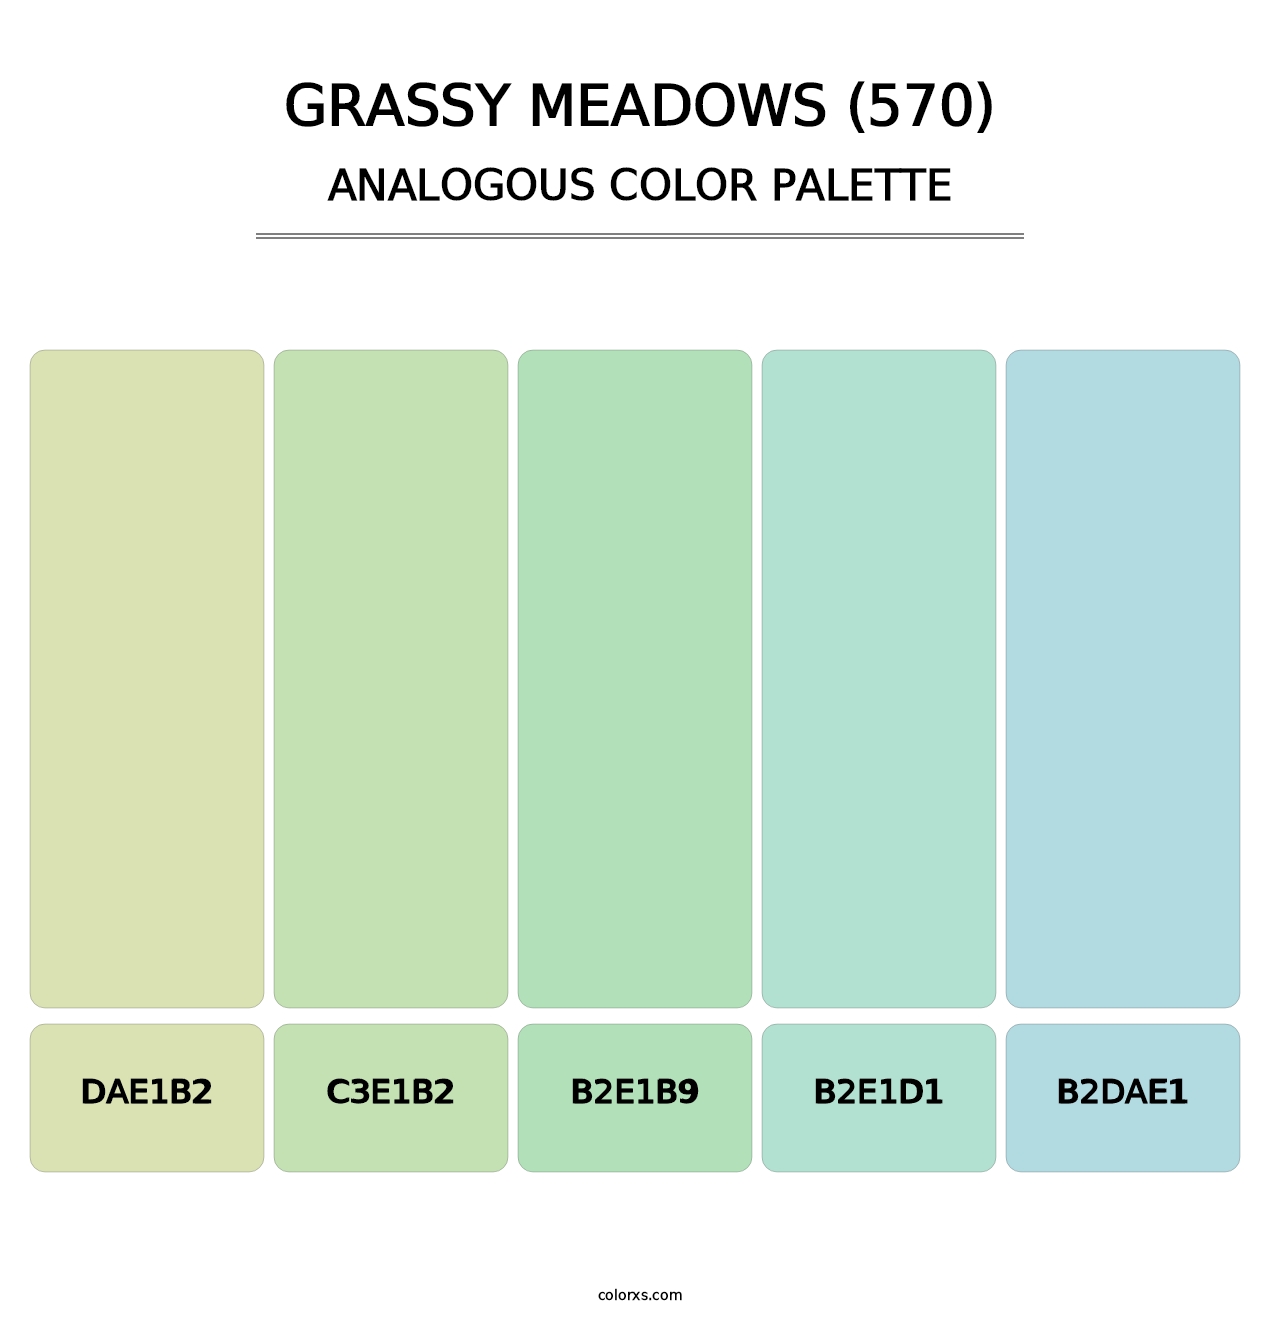 Grassy Meadows (570) - Analogous Color Palette